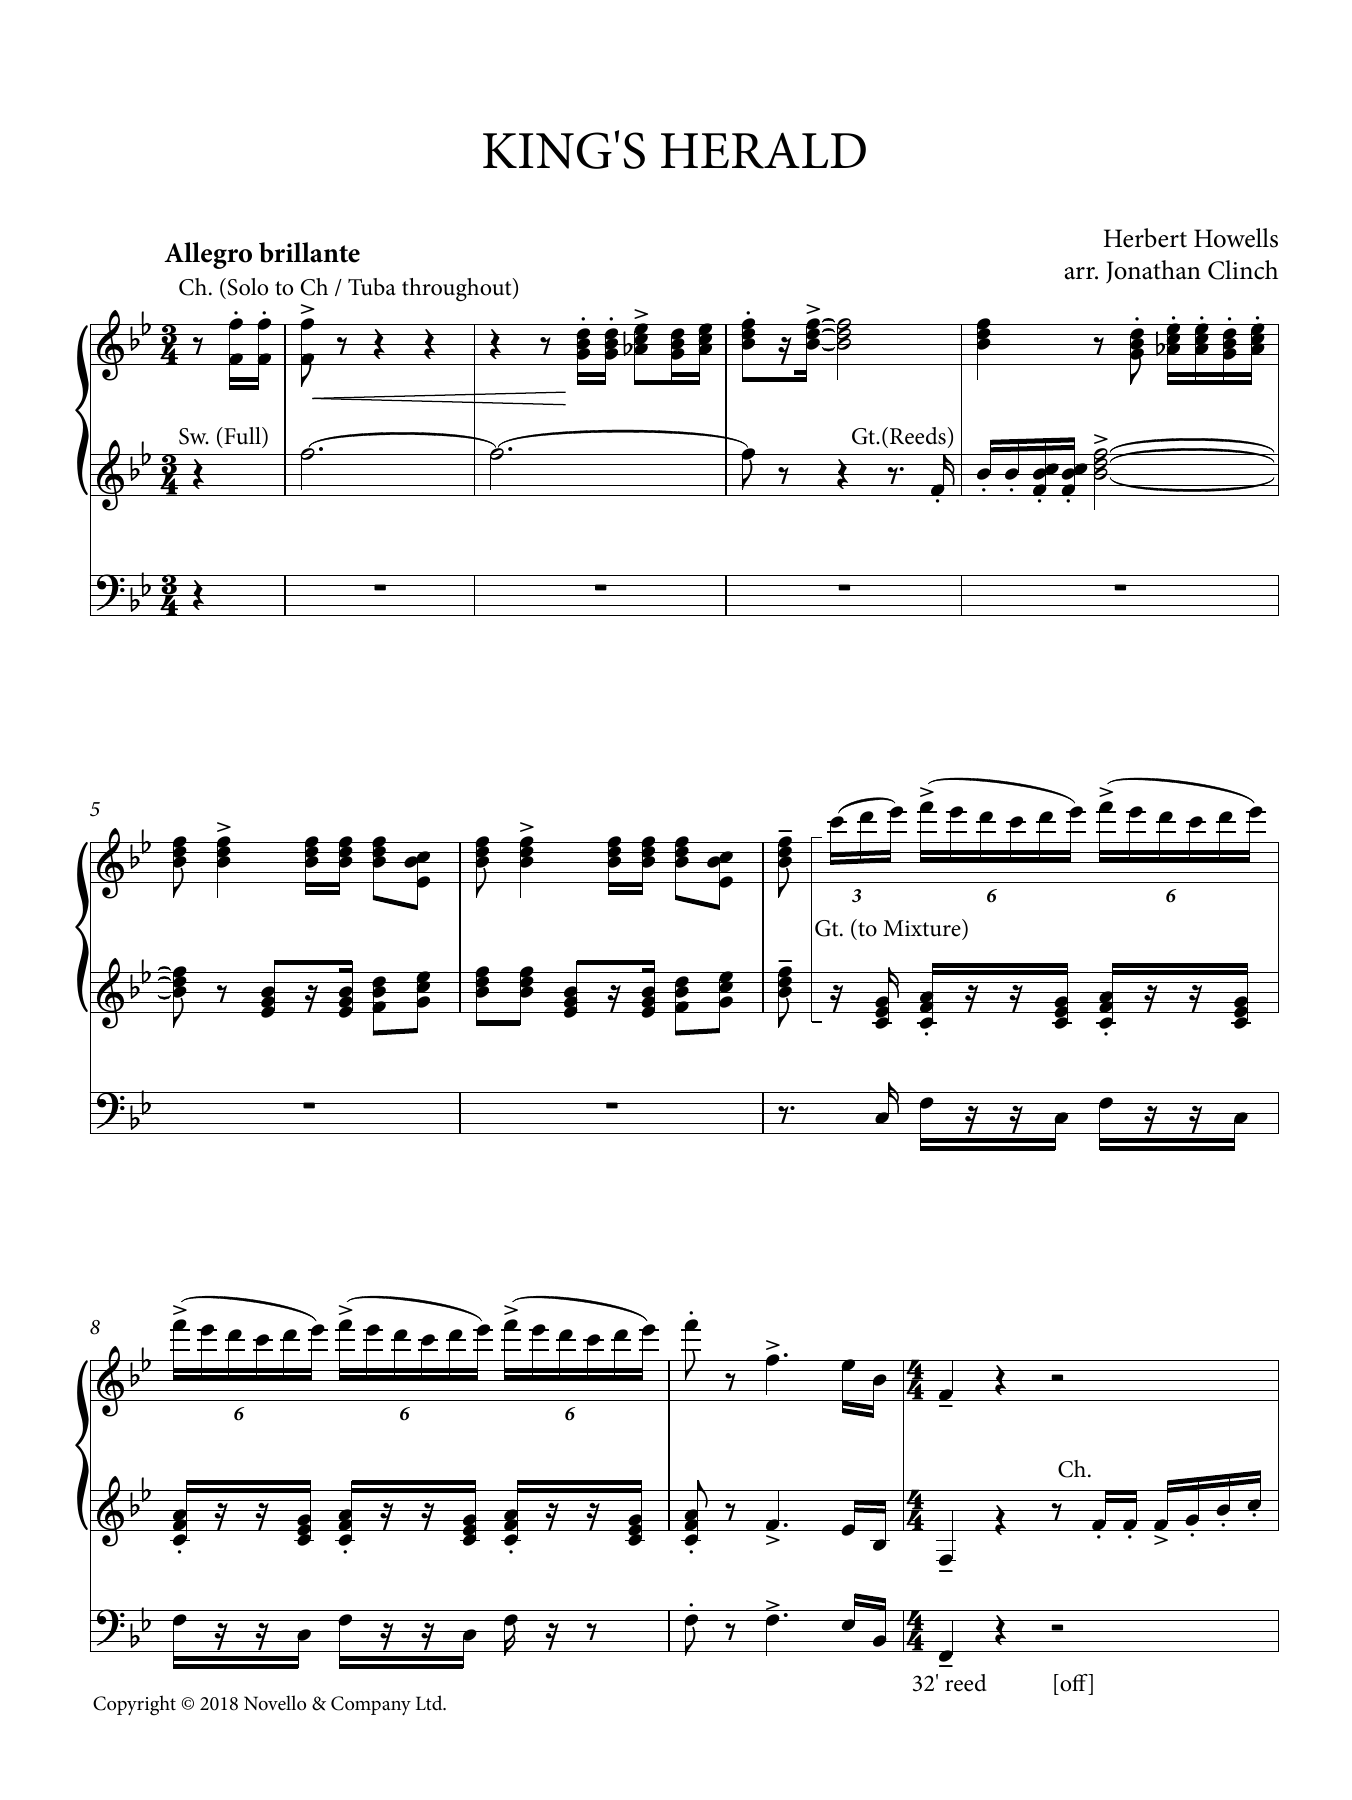 Herbert Howells King's Herald Sheet Music Notes & Chords for Organ - Download or Print PDF